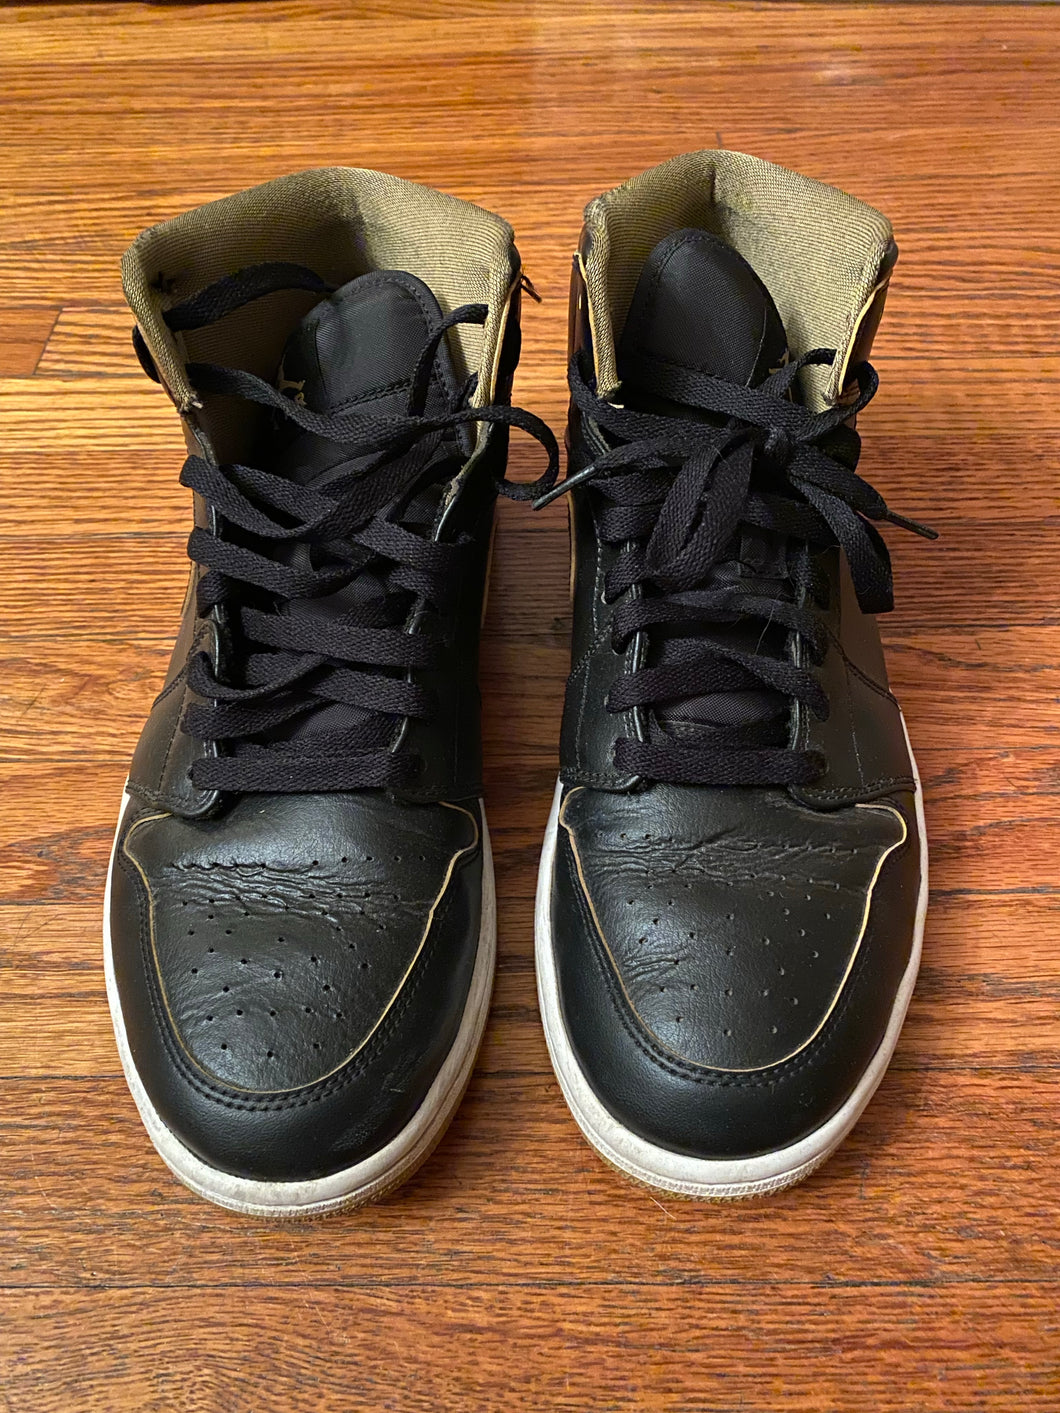 Men’s Black Leather Air Jordans - The Curatorial Dept.